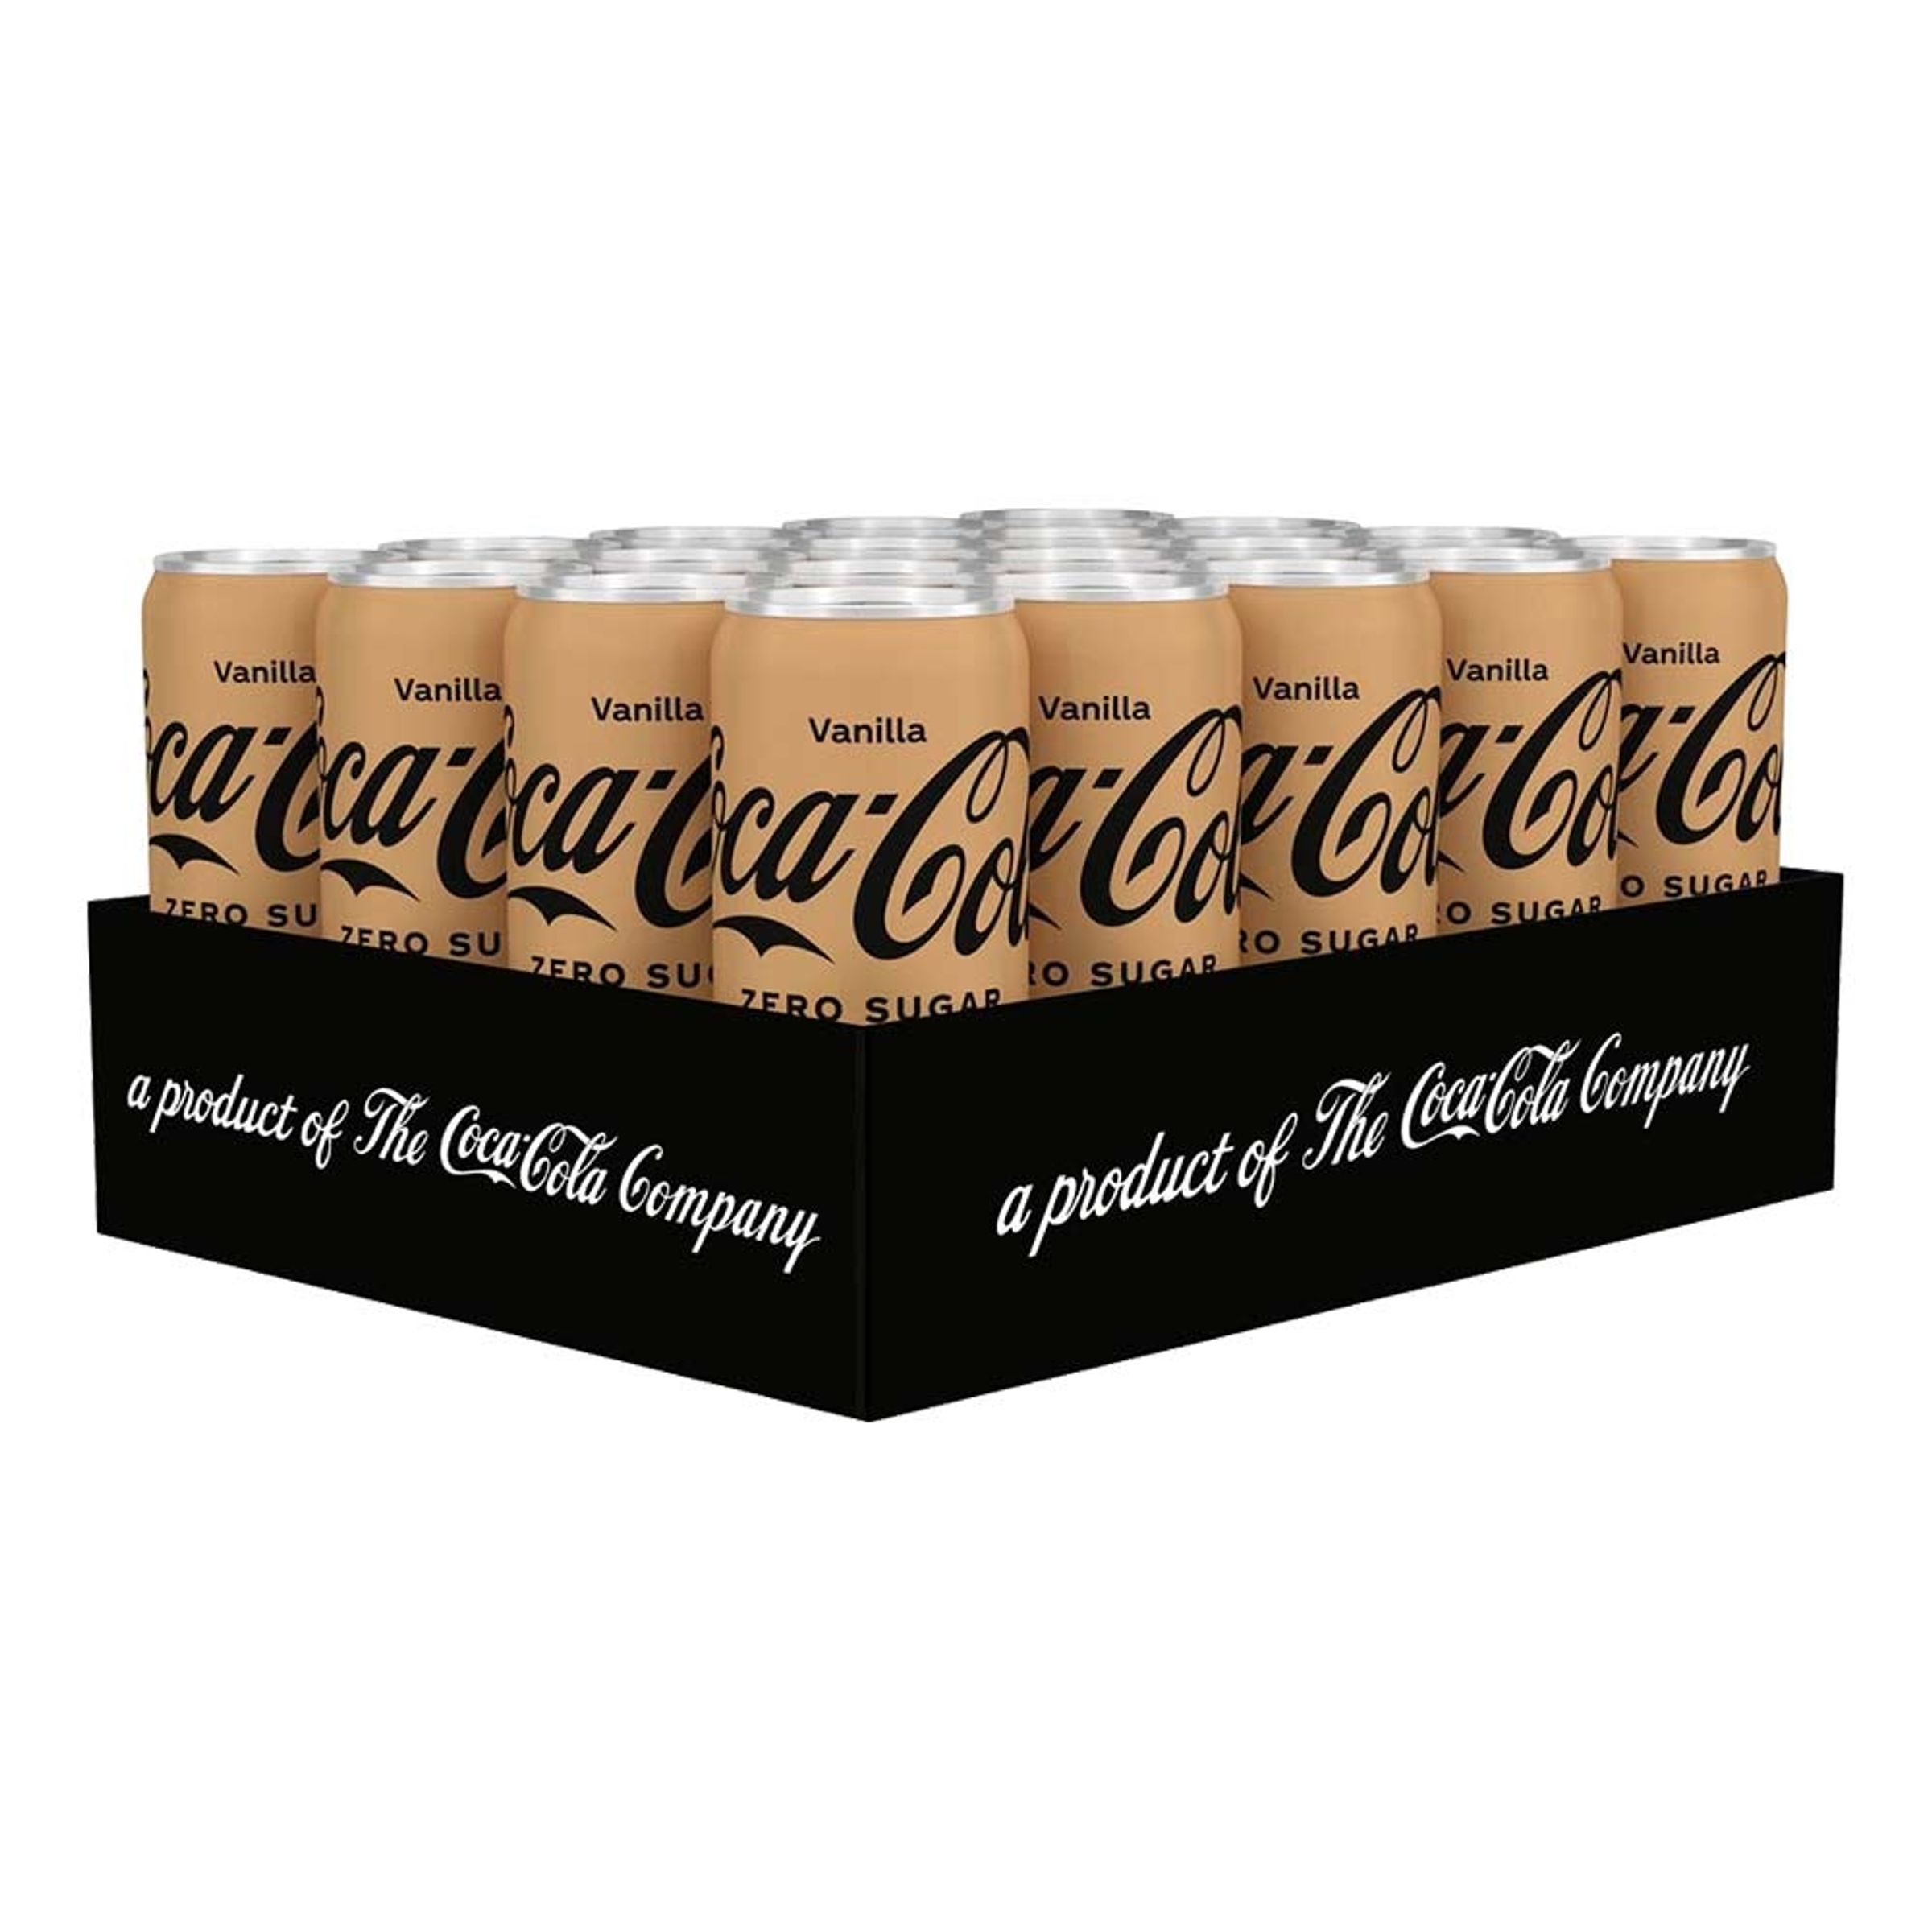 Coca-Cola Vanilla Zero - 20-pack